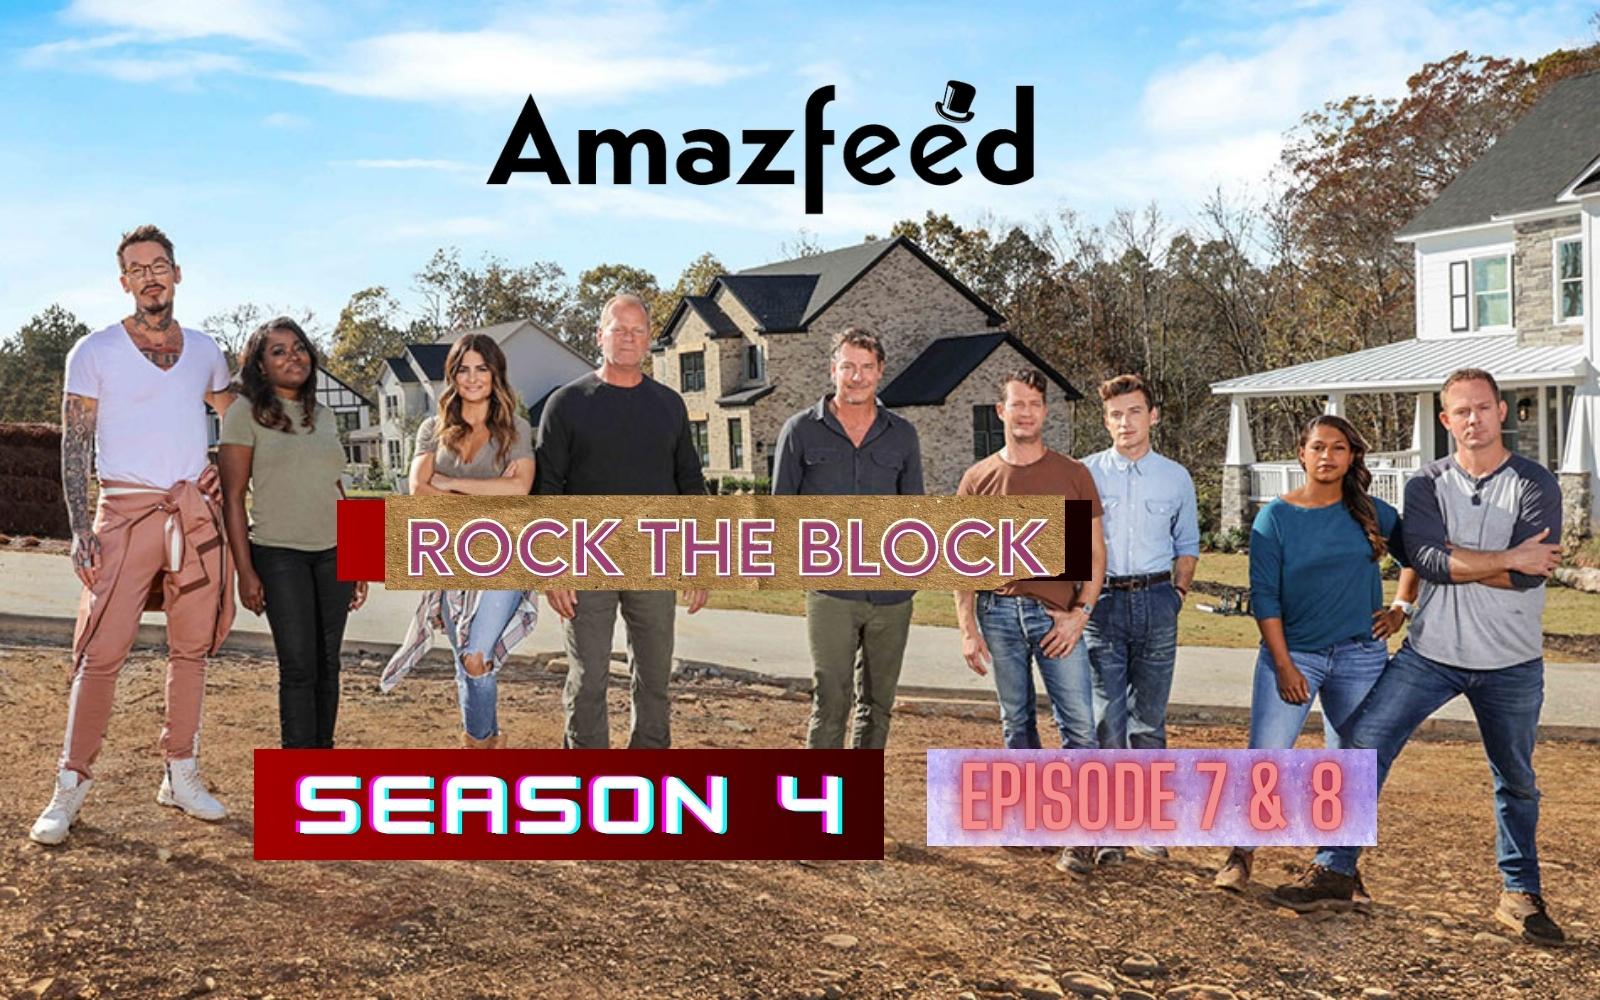 Rock The Block Season 4 Episodes 7 & 8 Release Date, Storyline